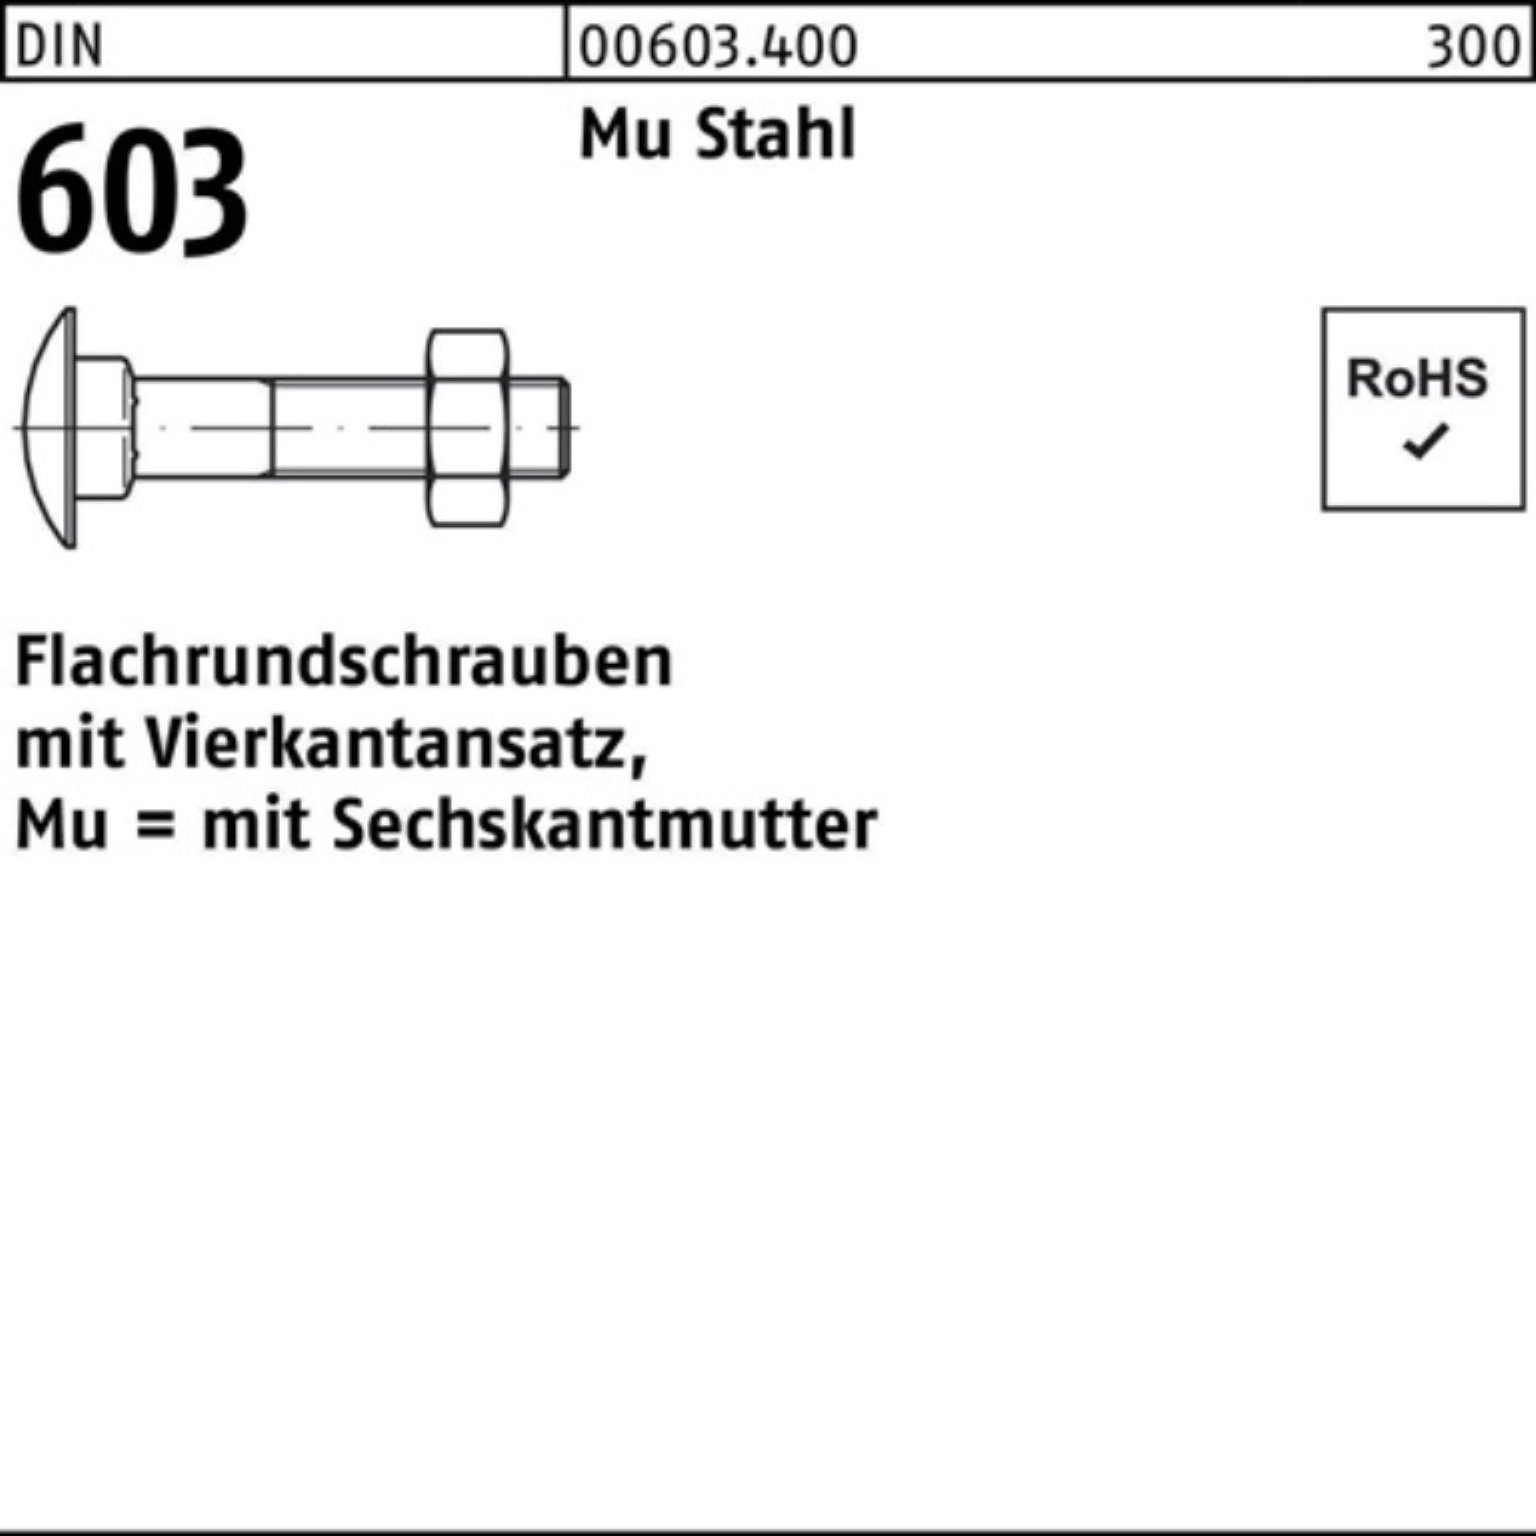 DIN Vierkantansatz/6-ktmutter Pack Flachrundschraube 603 Reyher 200er Schraube M8x25 M